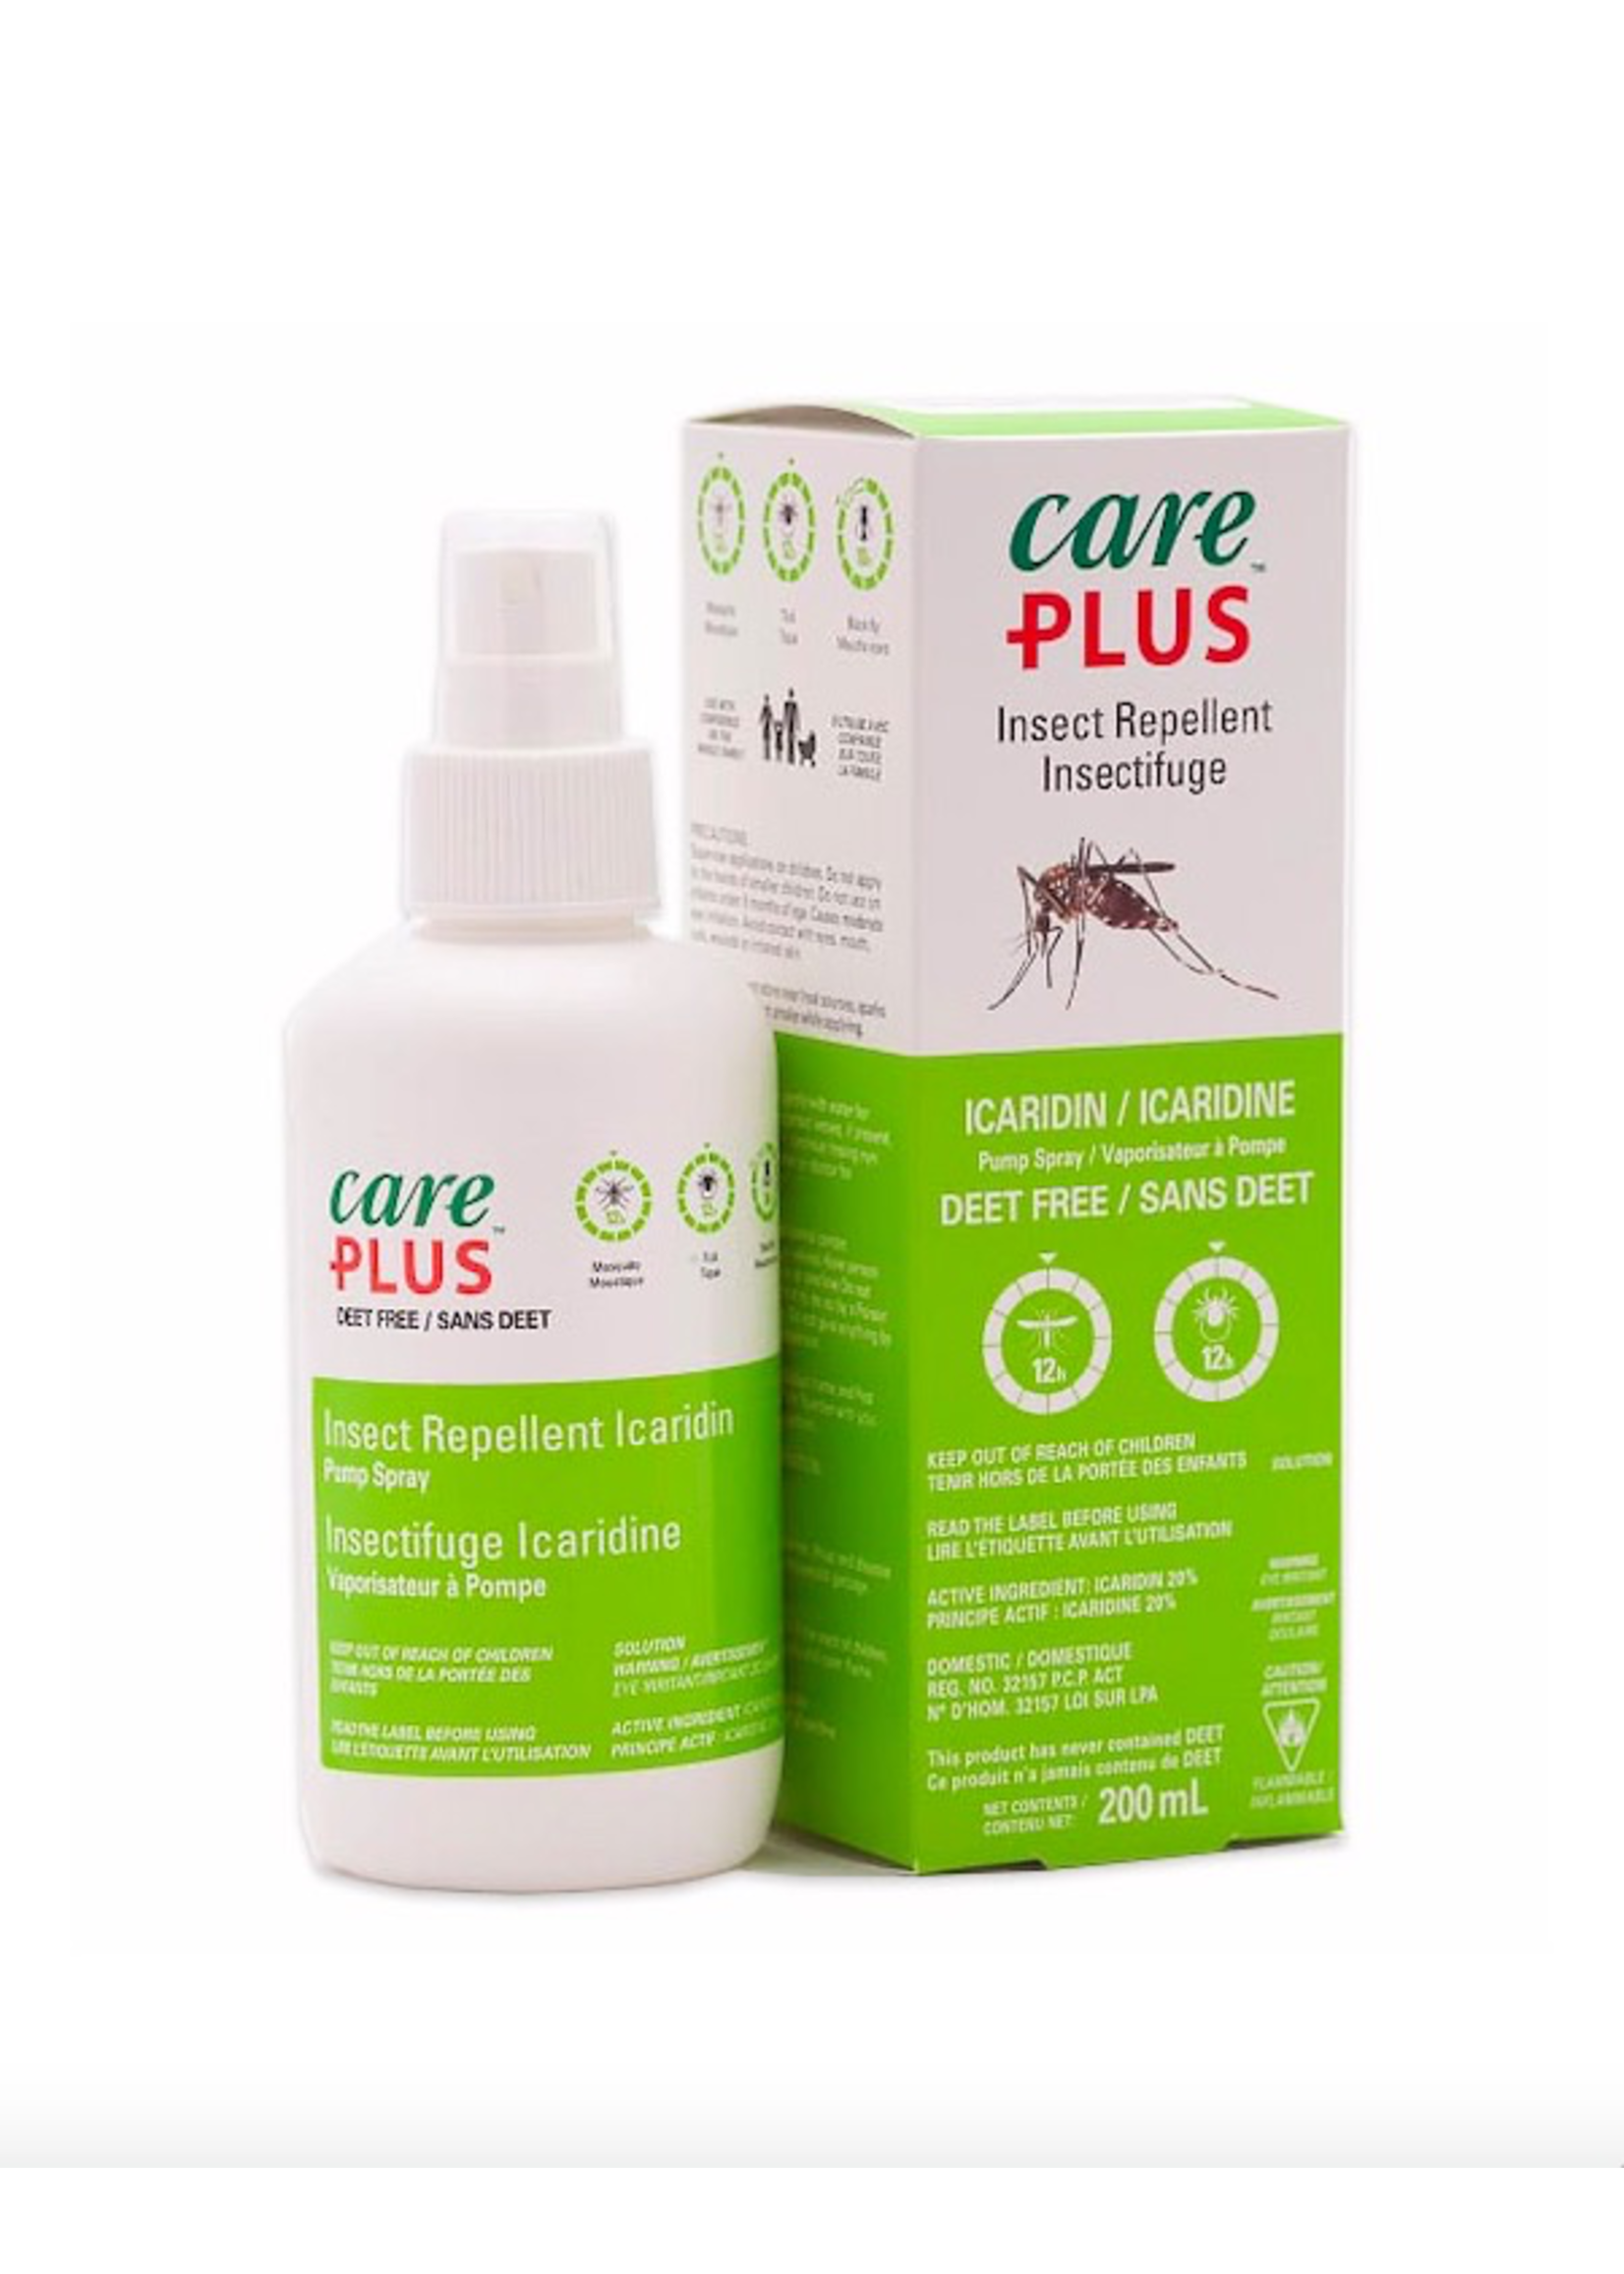 Care Plus Care Plus, Insect Repellent 200ml